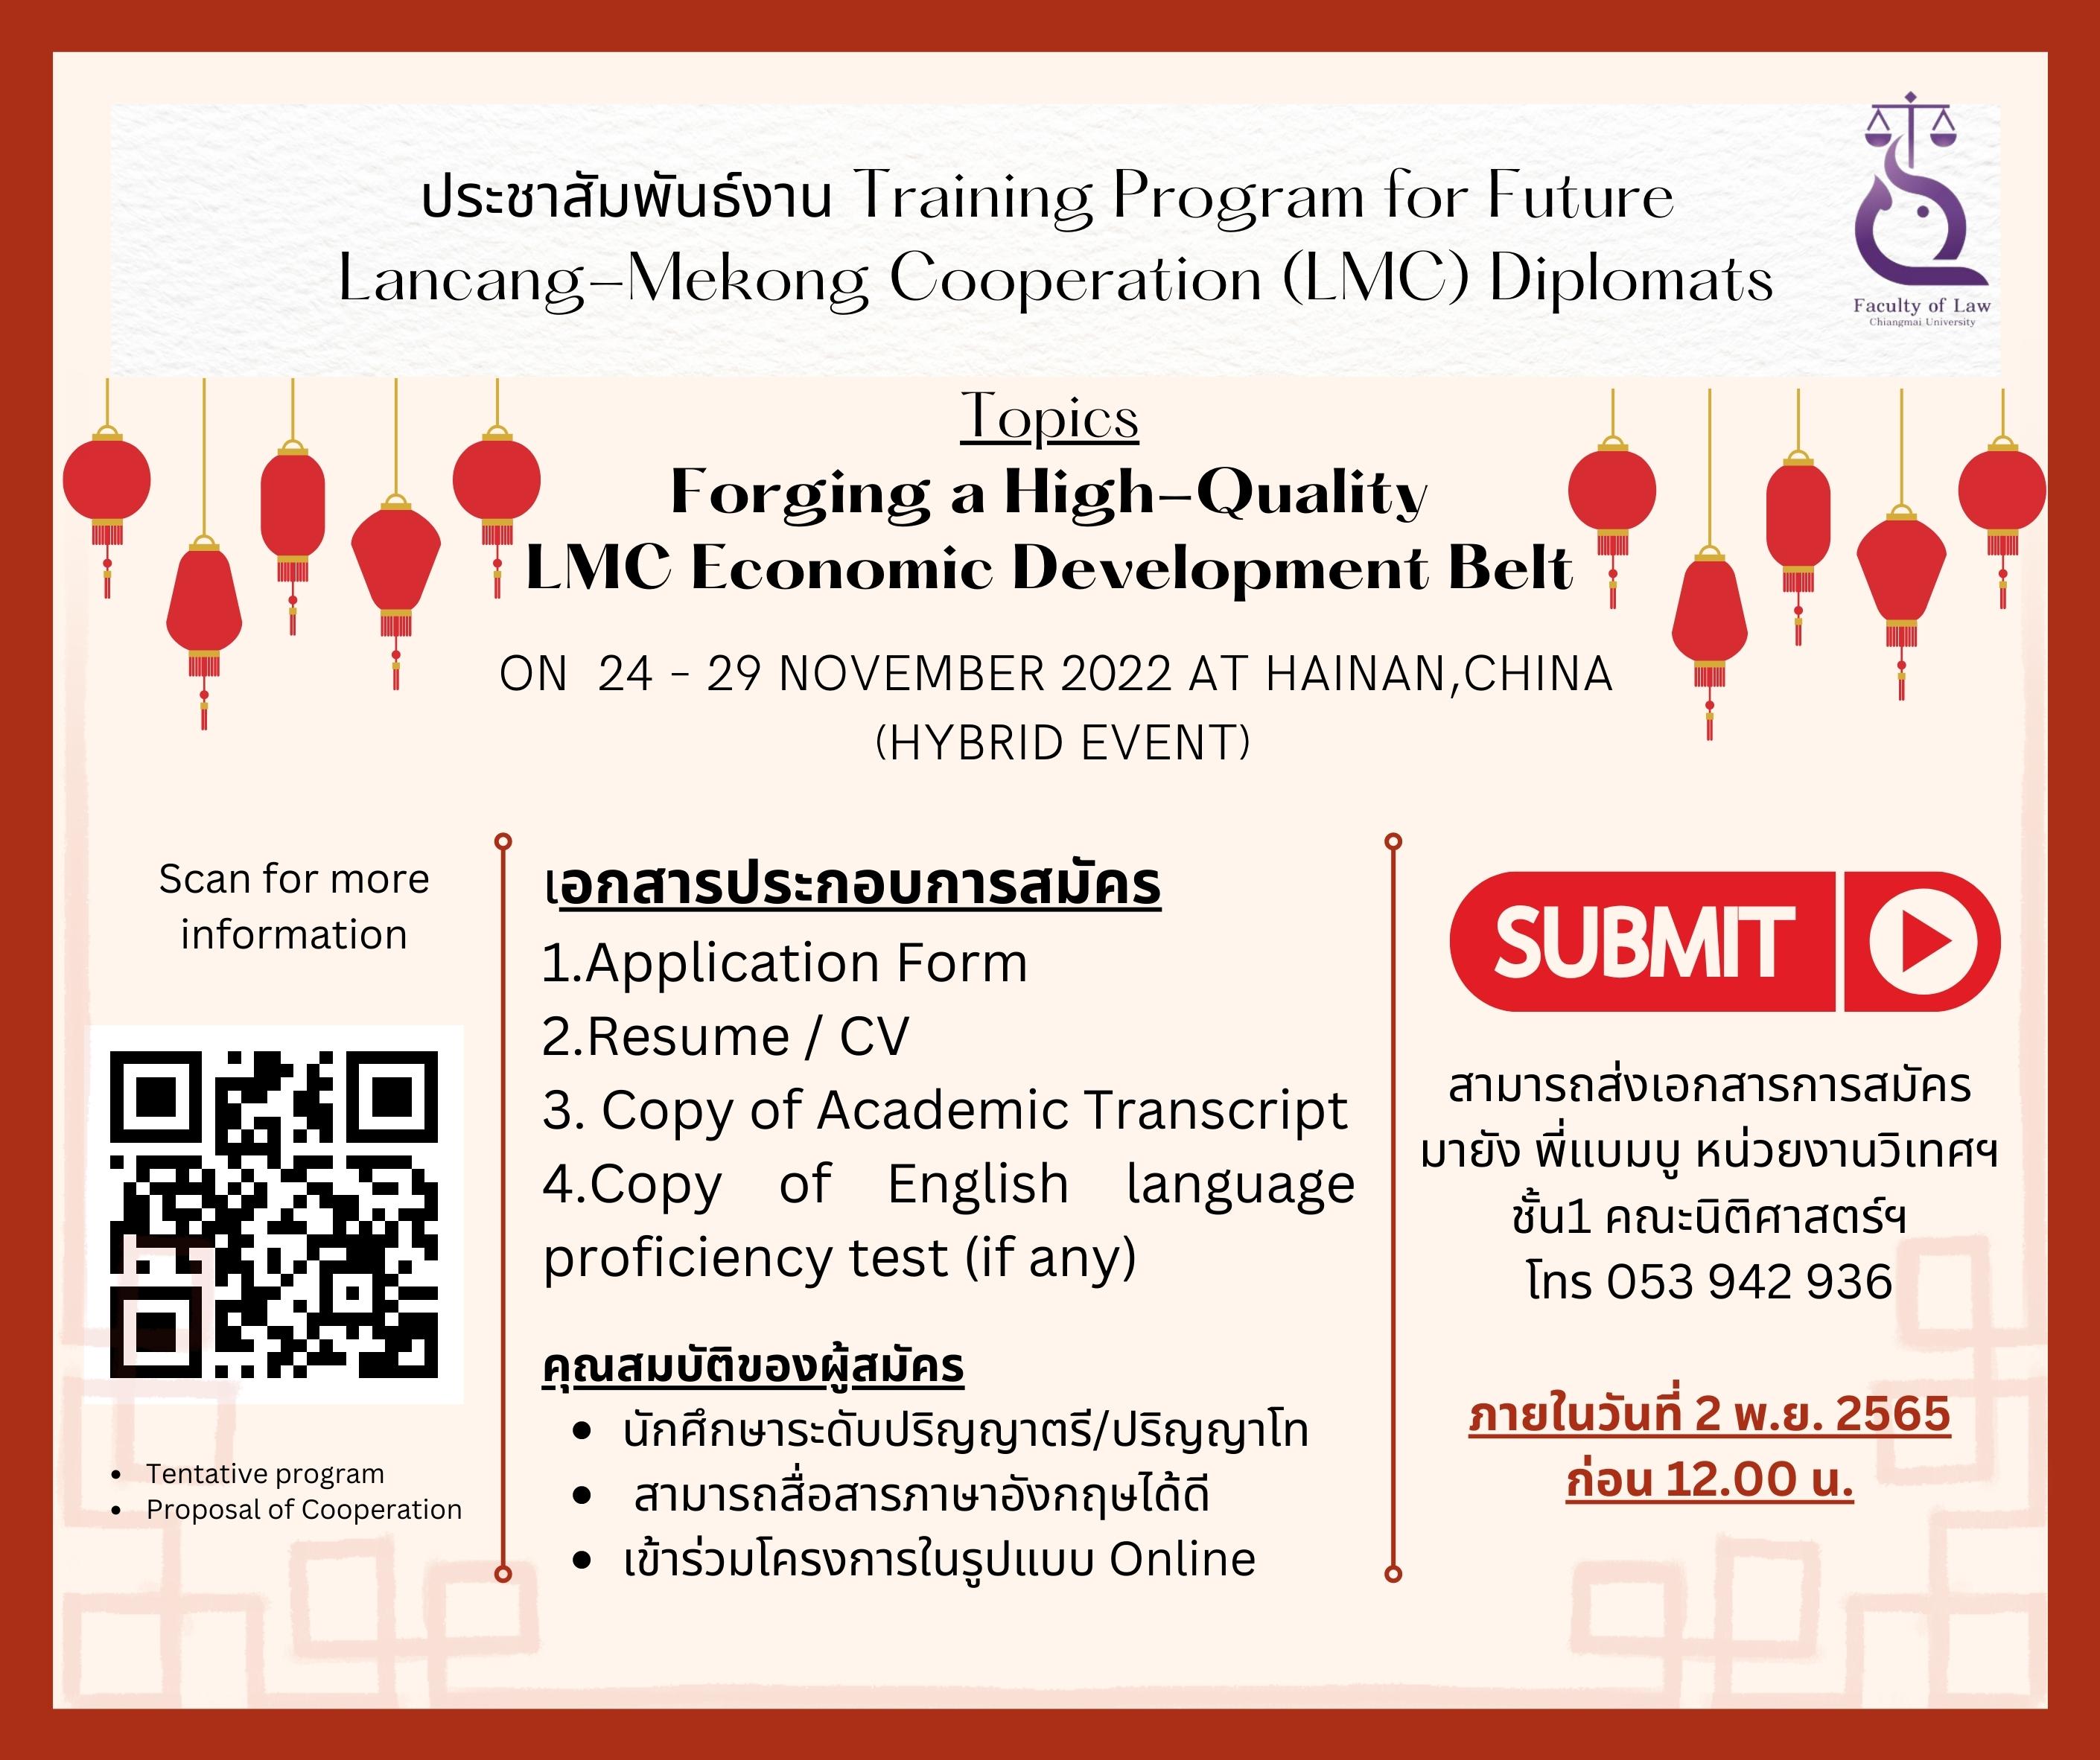 Training Program for Future Lancang-Mekong Cooperation (LMC) Diplomats 2022